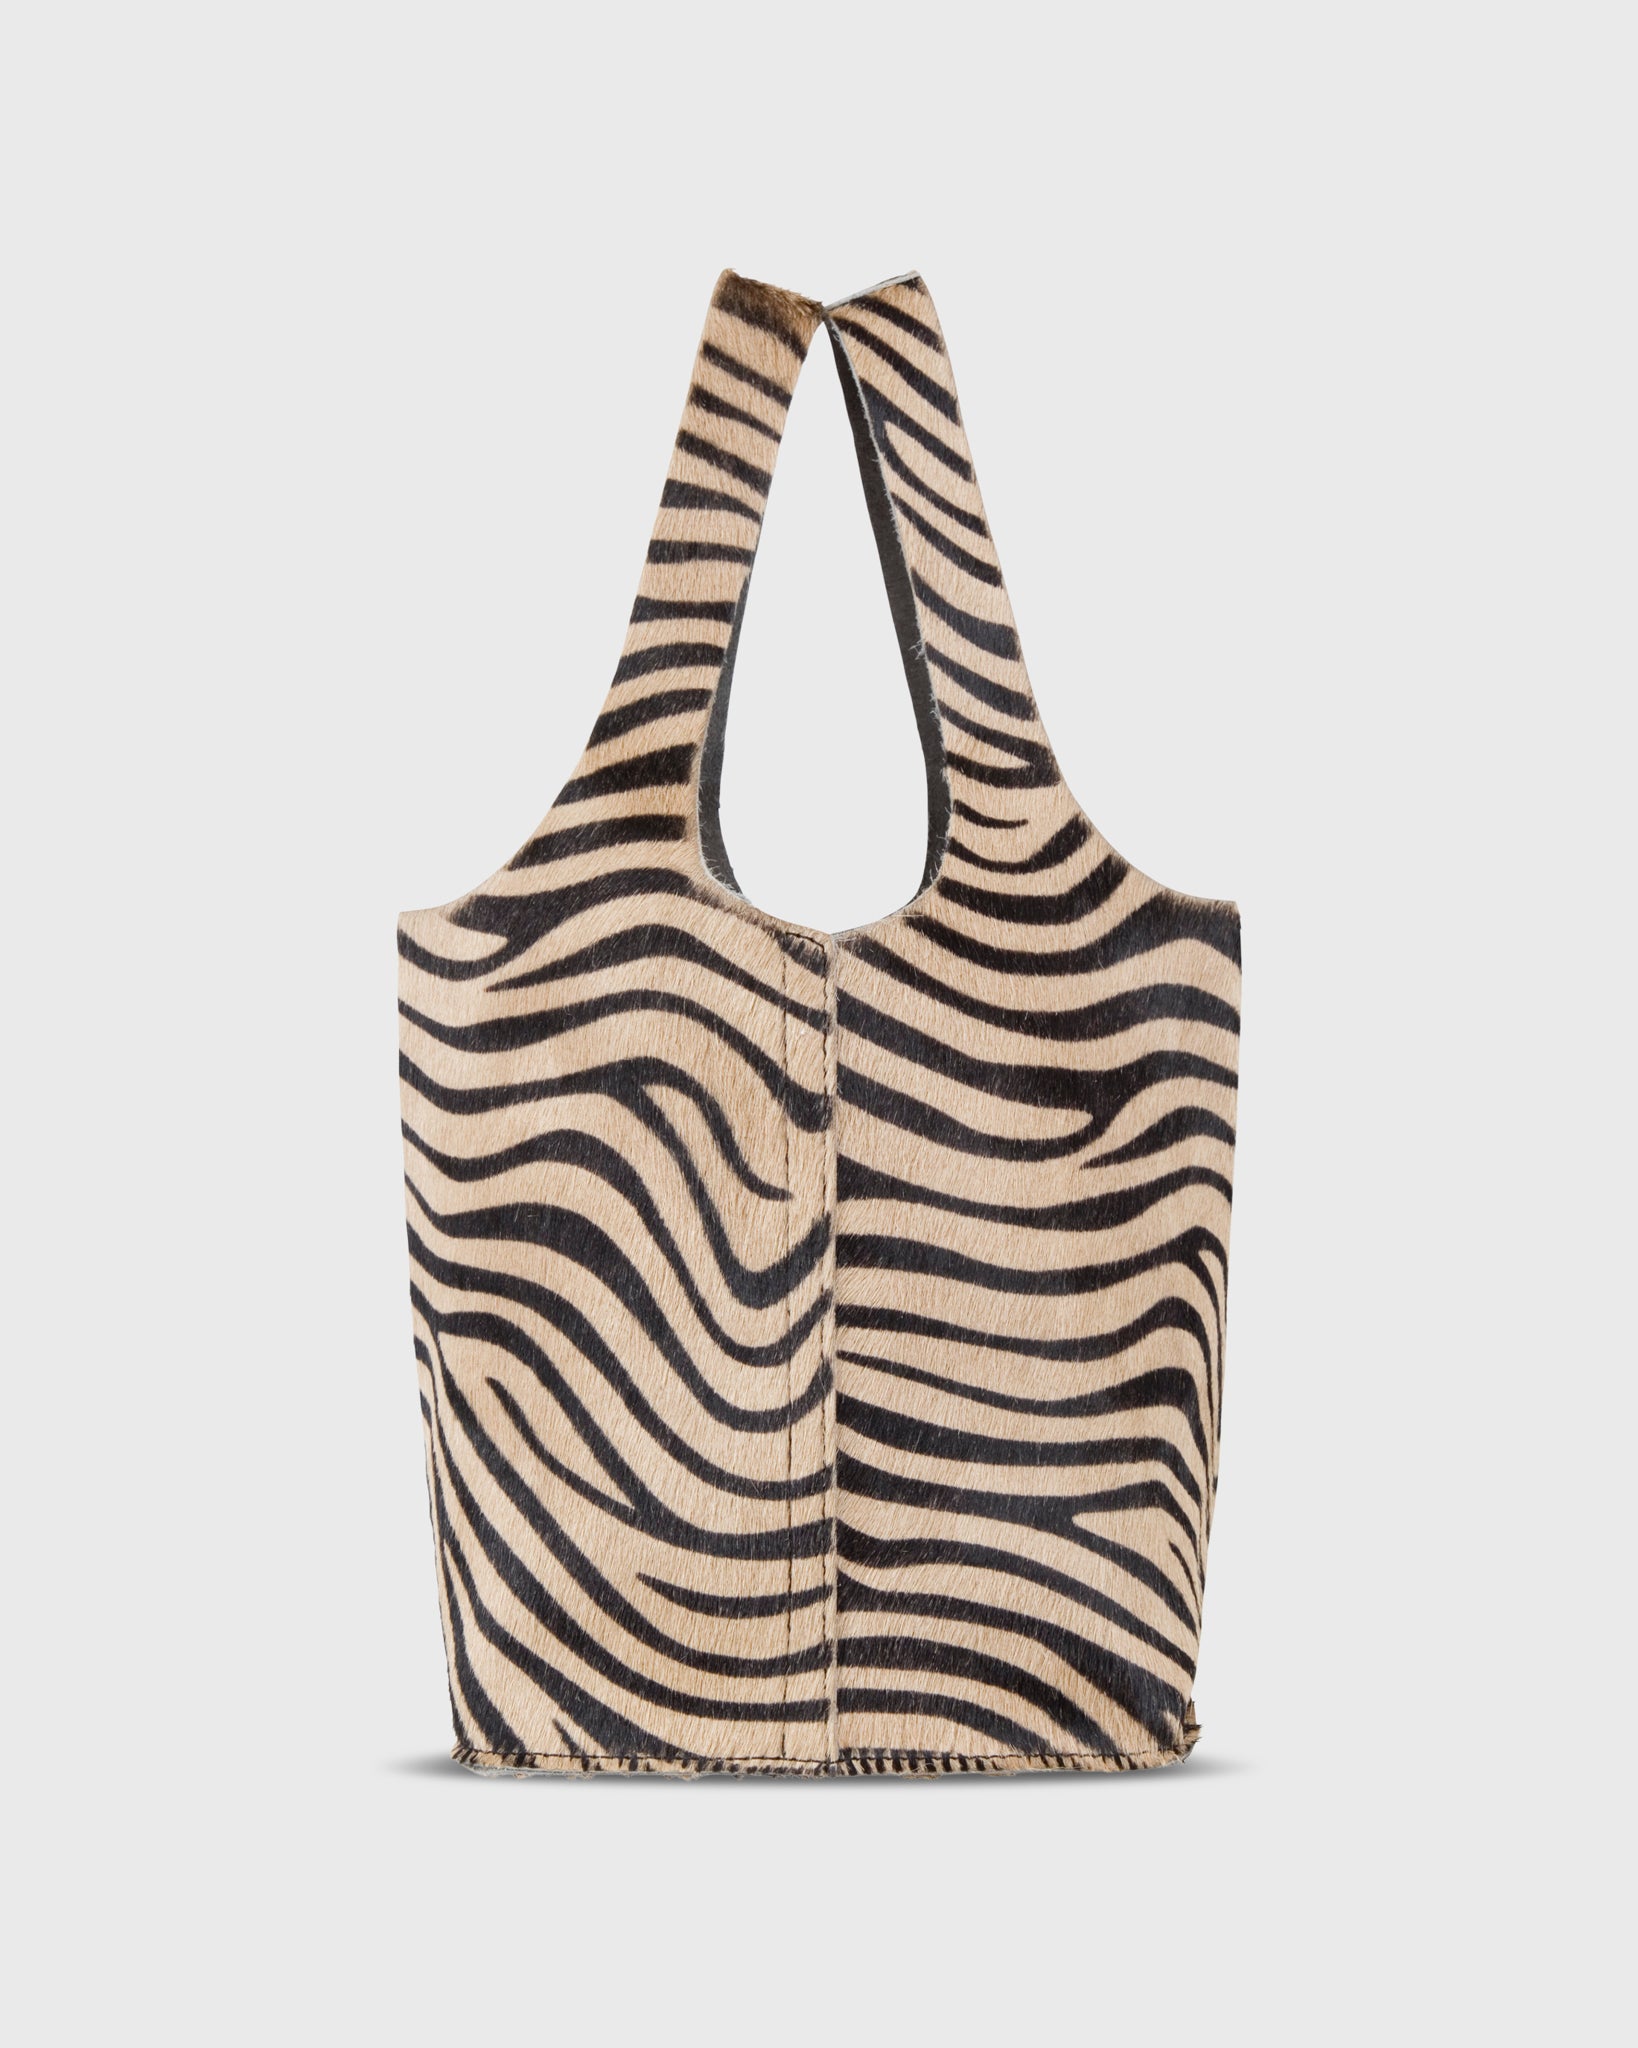 Paola Bucket Bag in Beige/Black Zebra Calf Hair